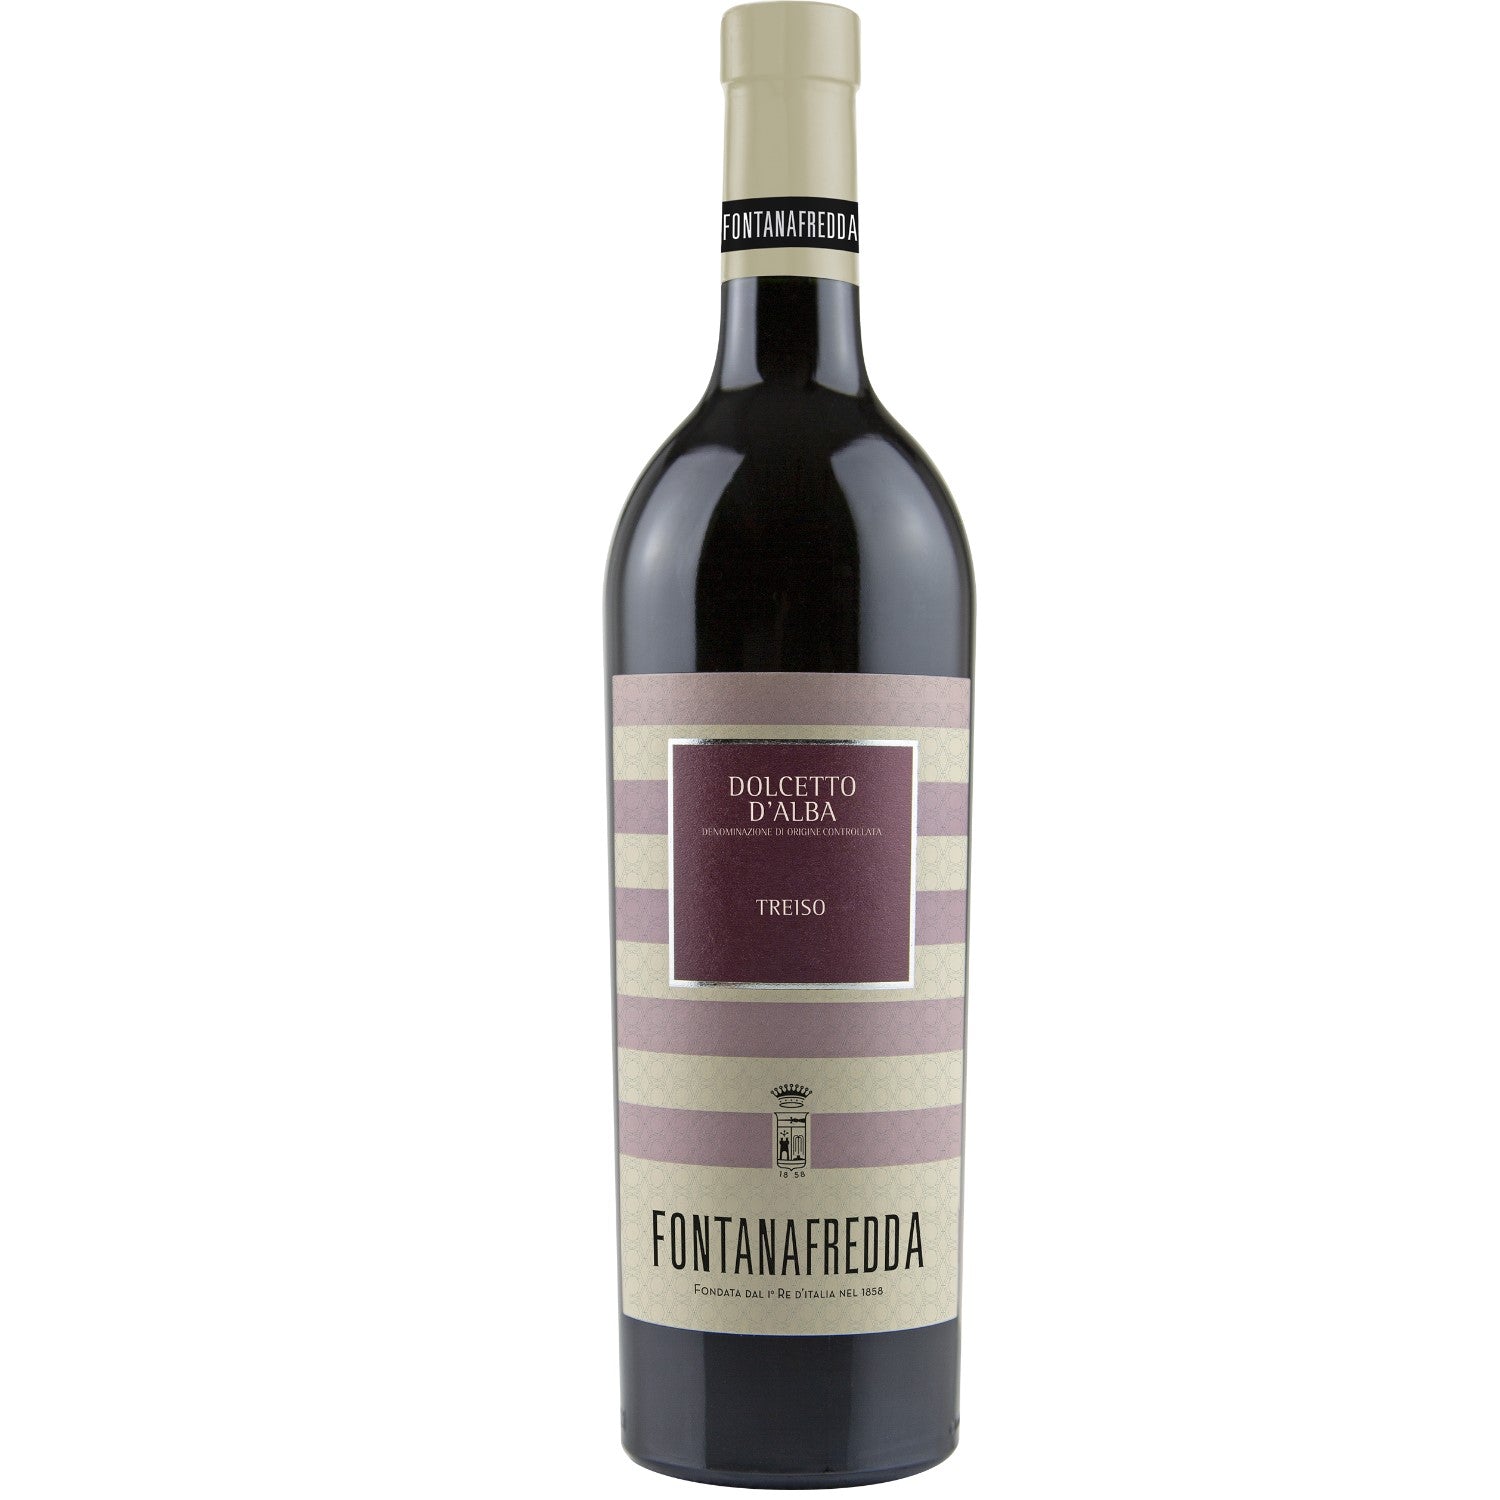 Fontanafredda Treiso Dolcetto d'Alba DOC Rotwein Wein trocken Italien (12 x 0.75l) - Versanel -